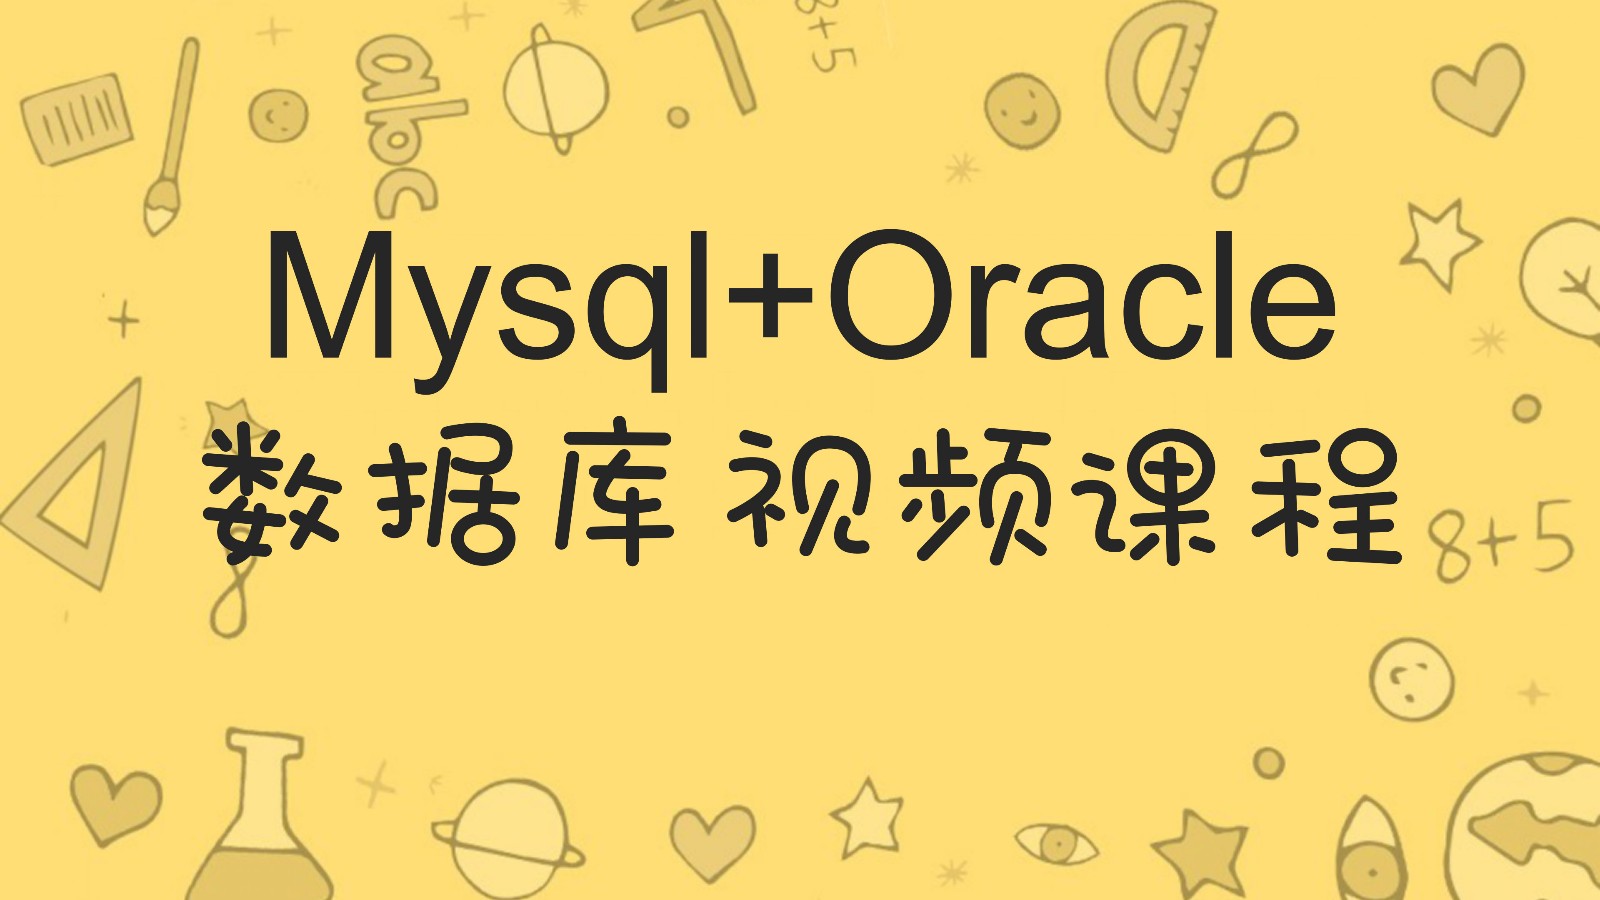 Mysql+Oracle数据库视频课程